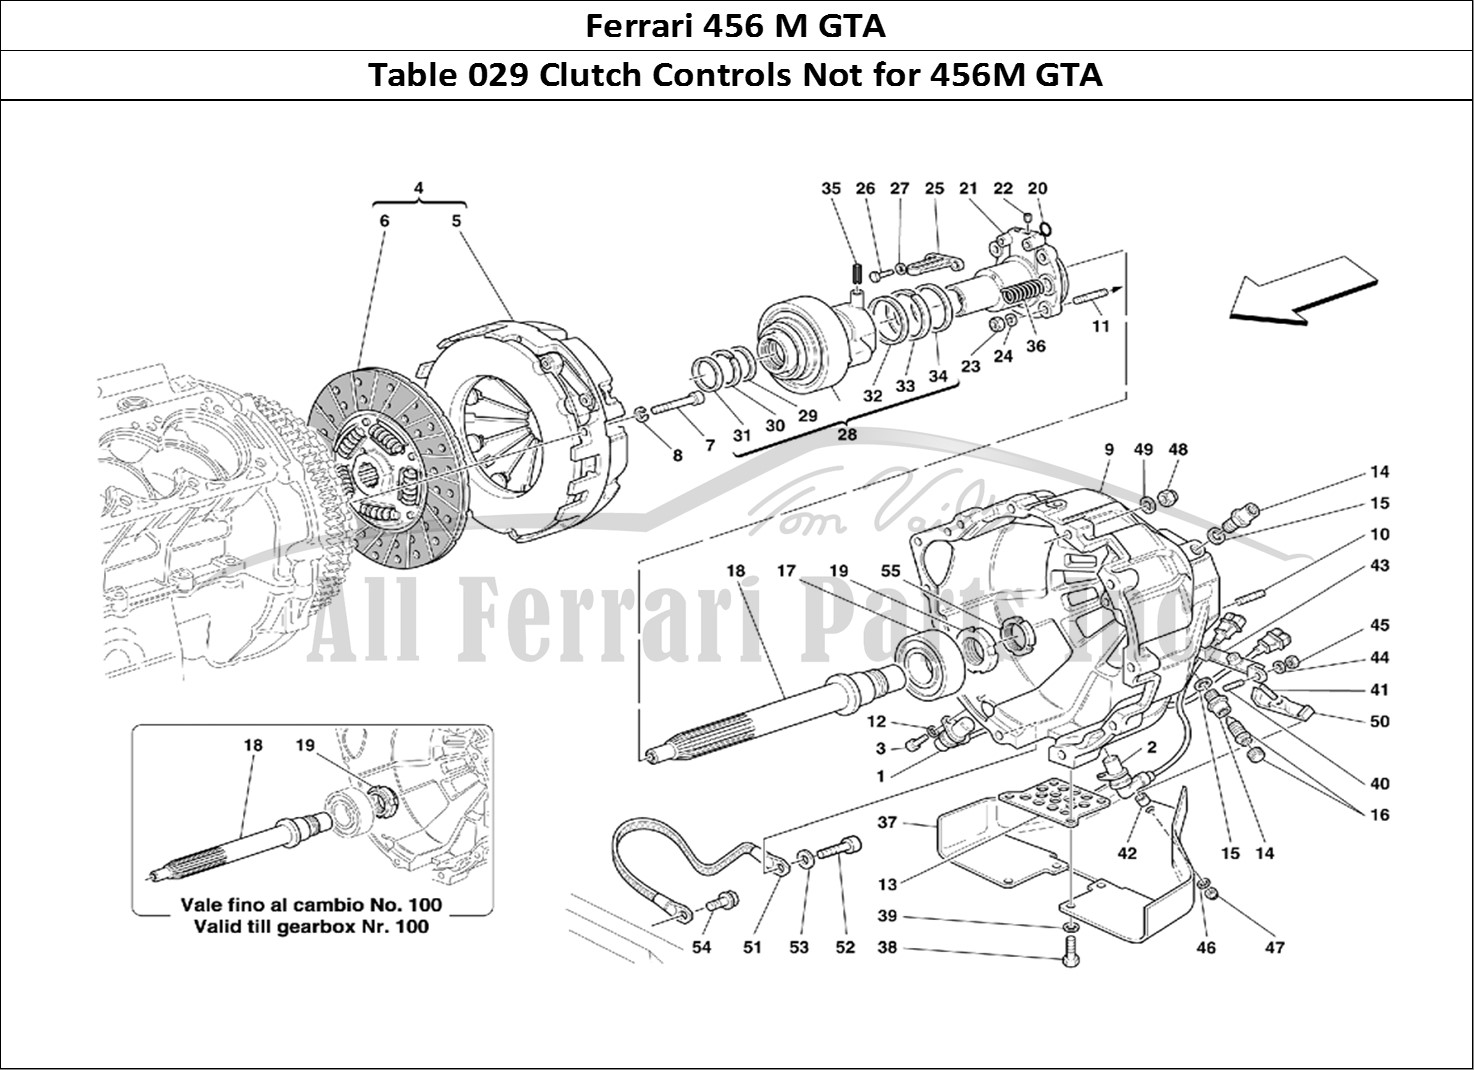 Ferrari Parts Ferrari 456 M GT Page 029 Clutch - Controls -Not fo